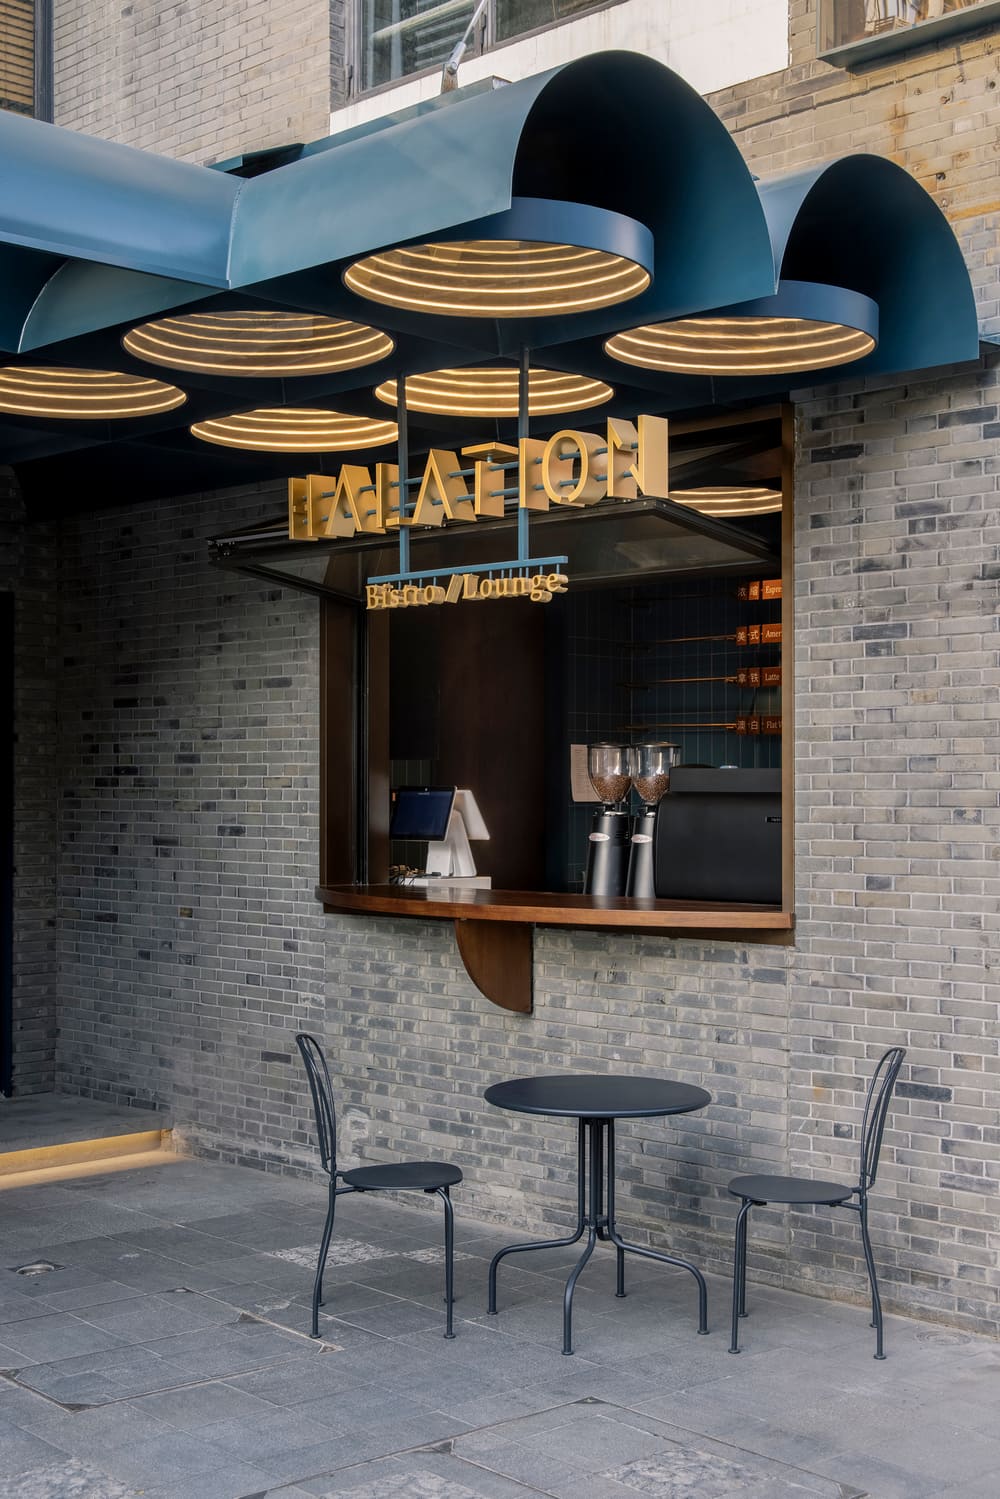 Halation Bistro/Lounge, Shanghai by RooMoo